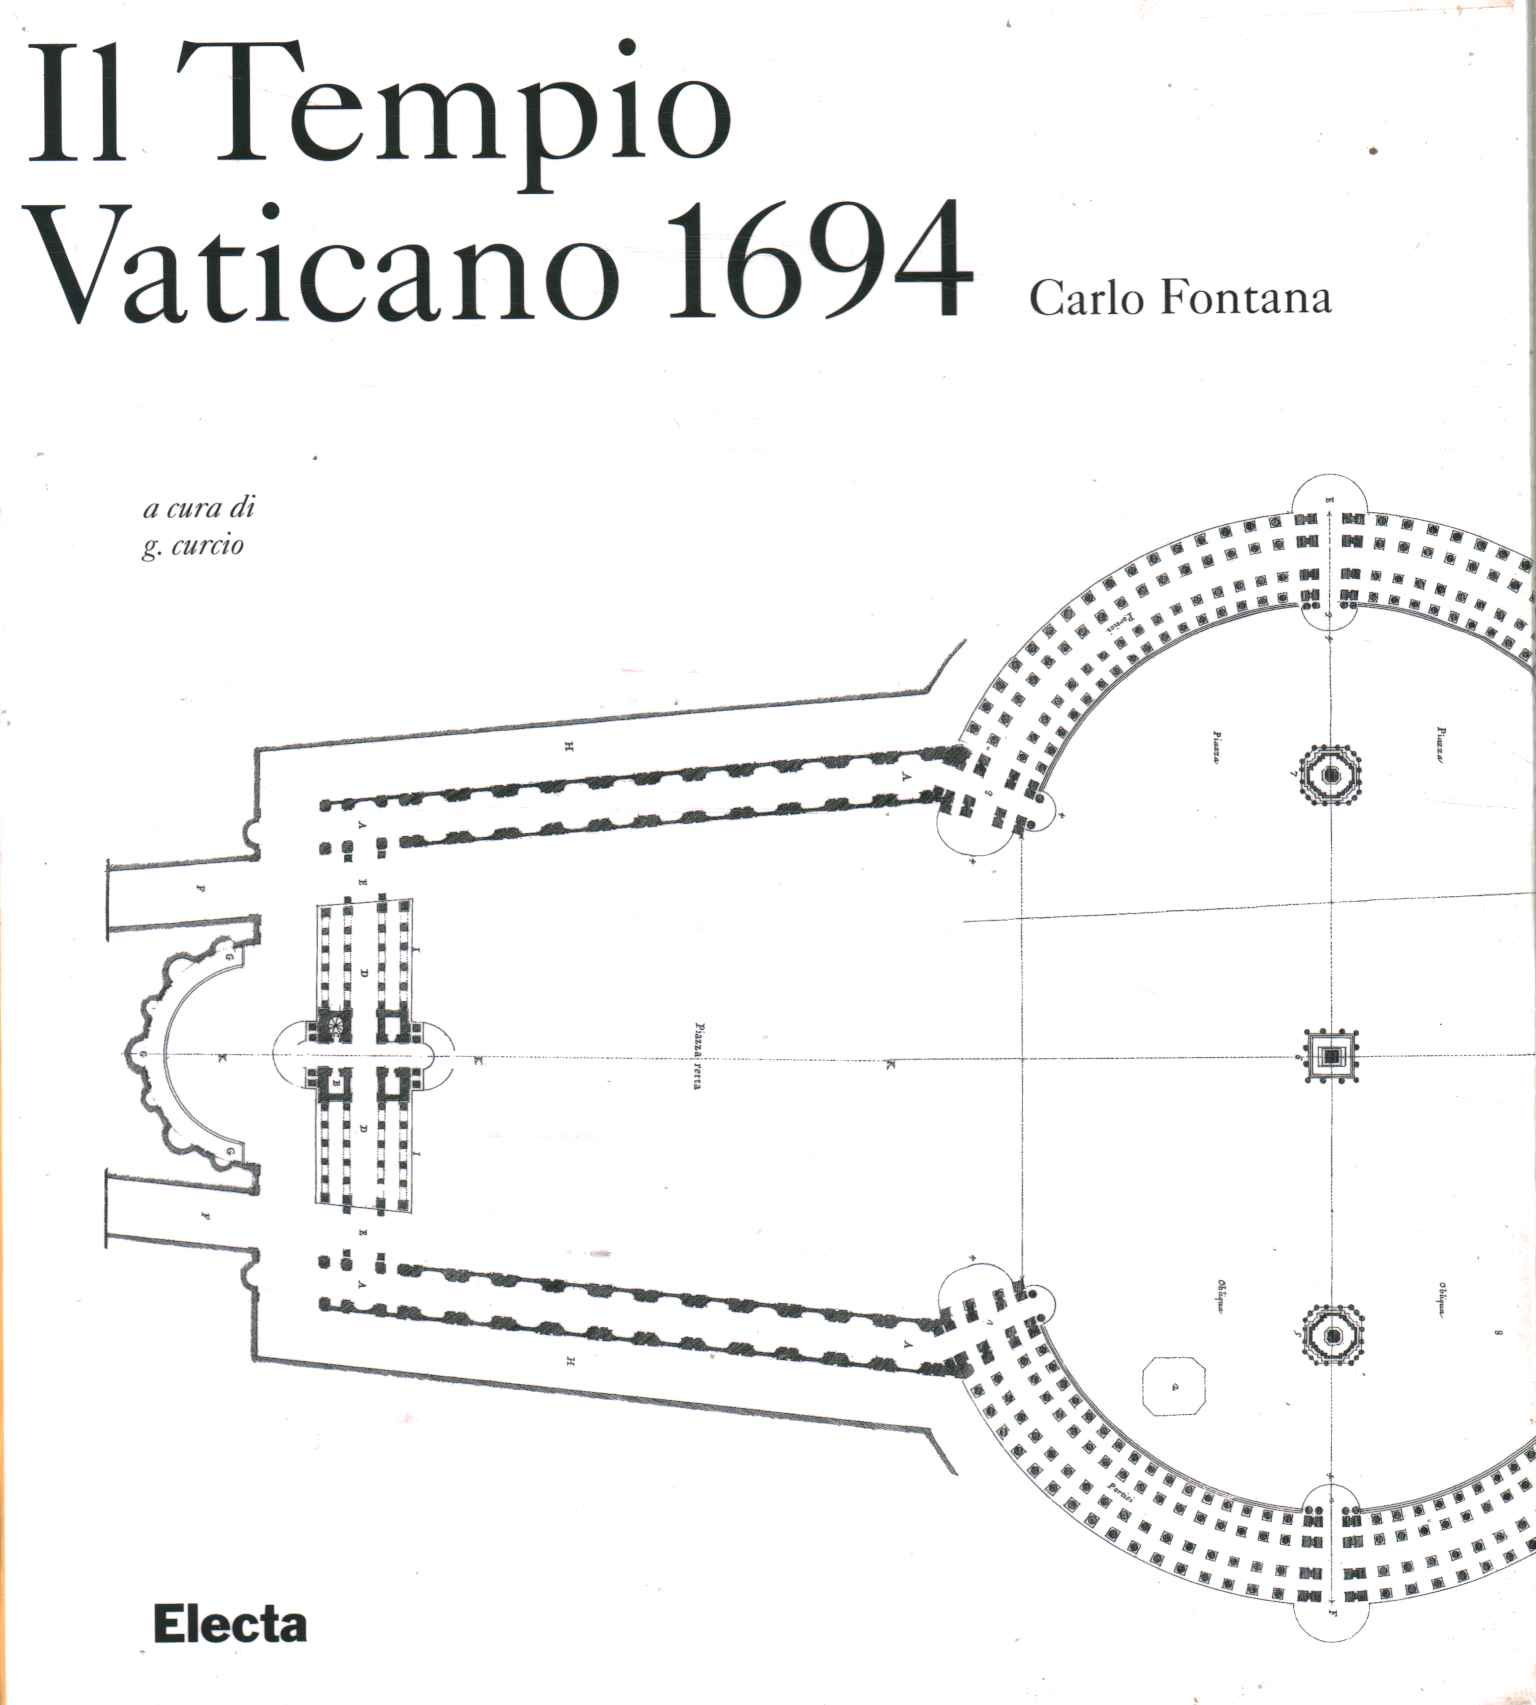 El templo del Vaticano 1694